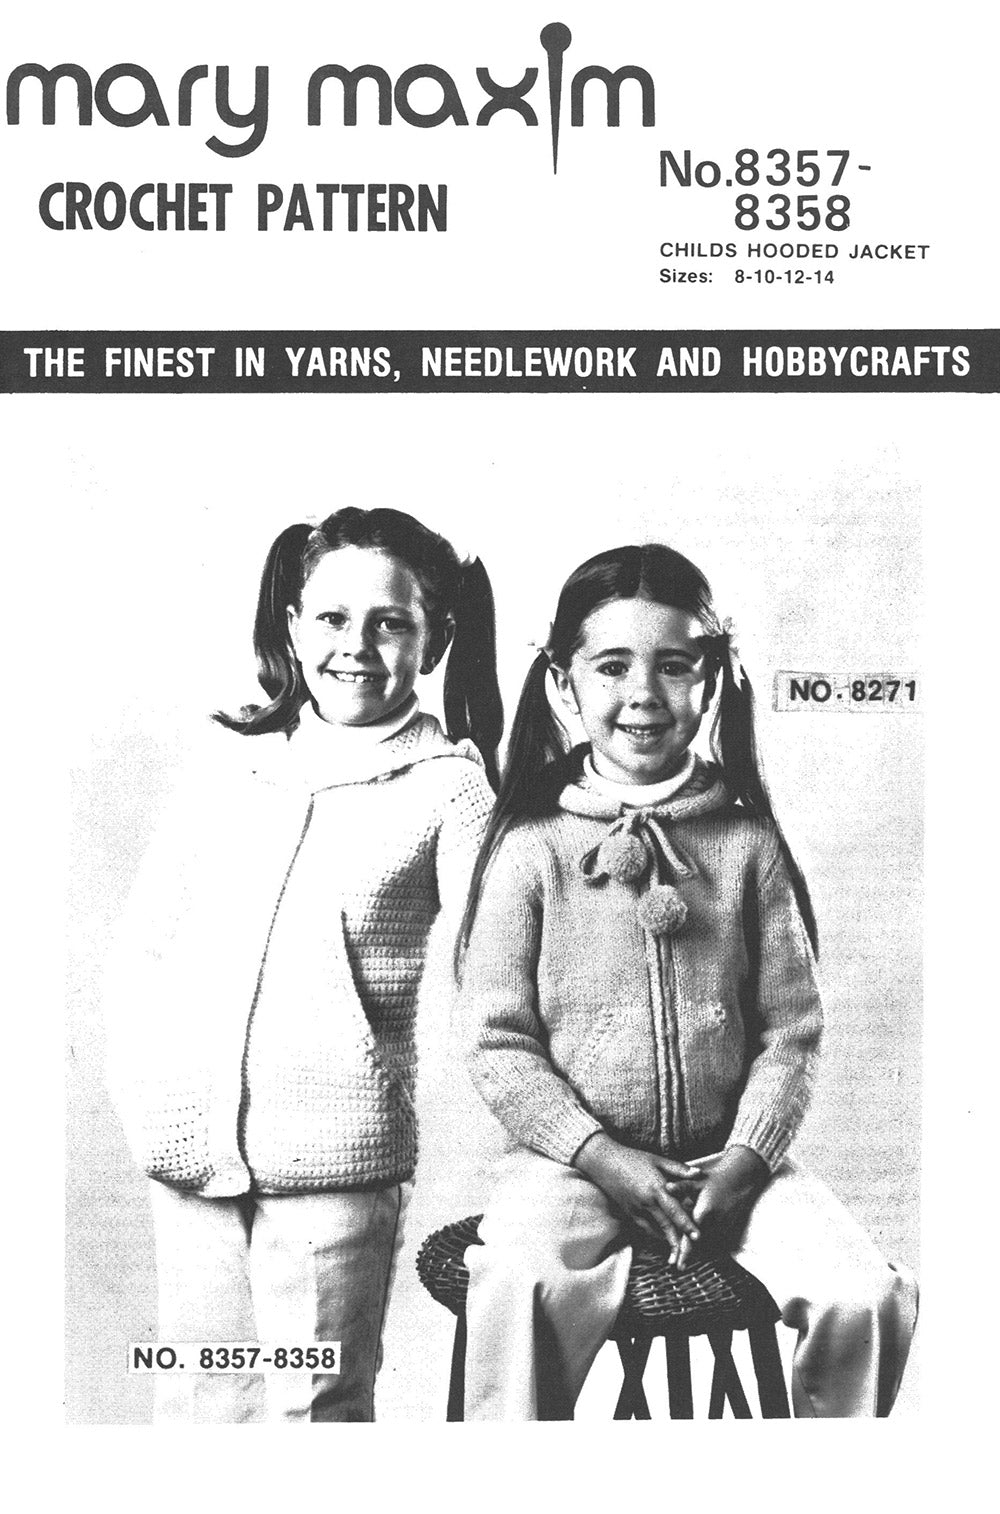 Child's hooded Jacket Pattern